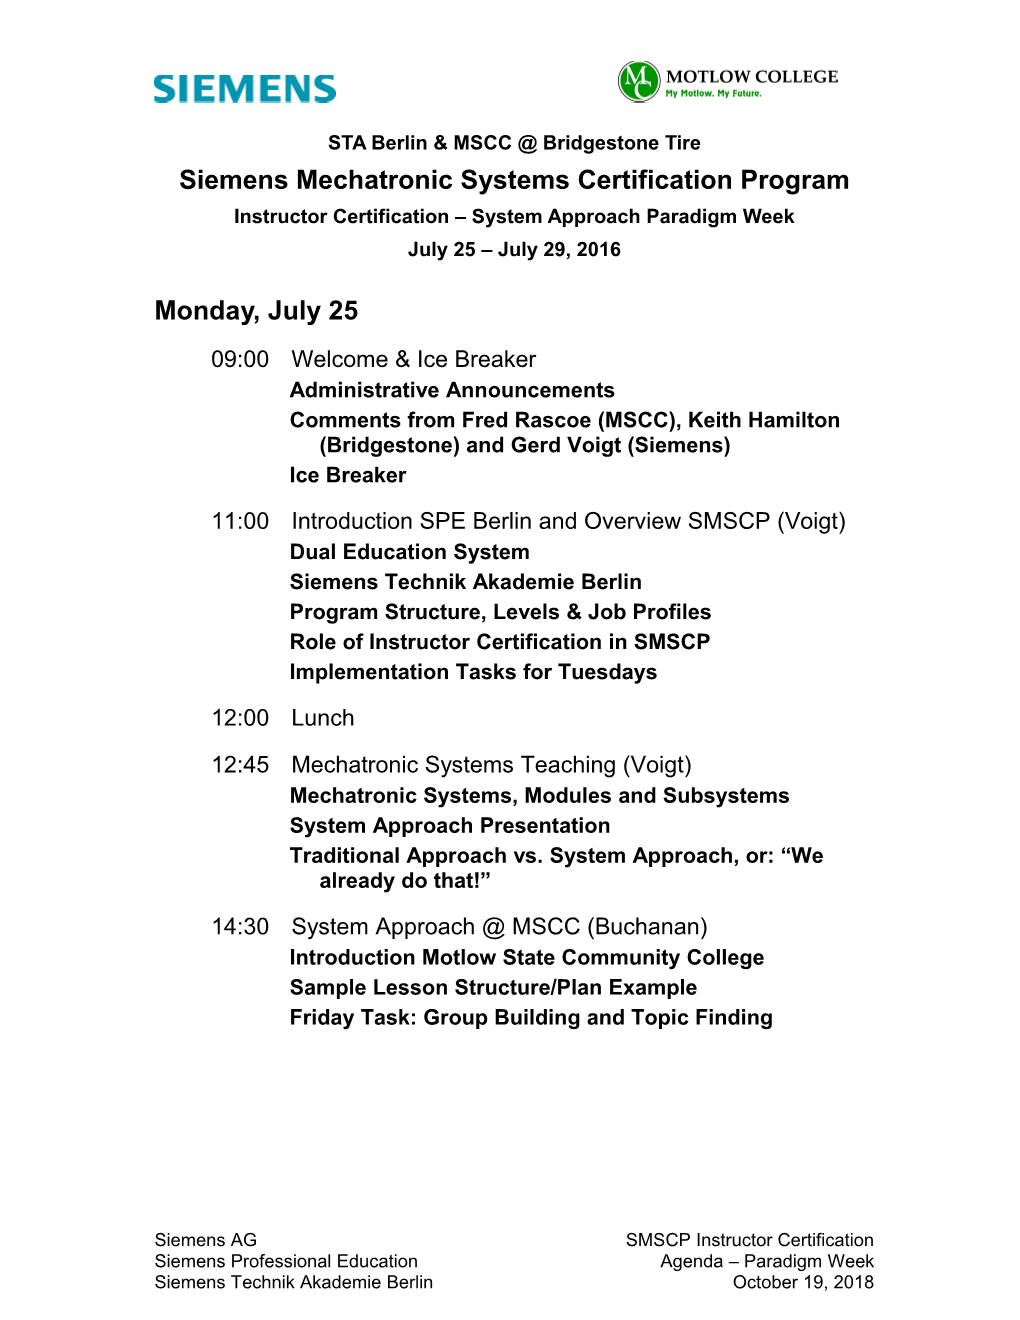 Siemens Mechatronic Systems Certification Program